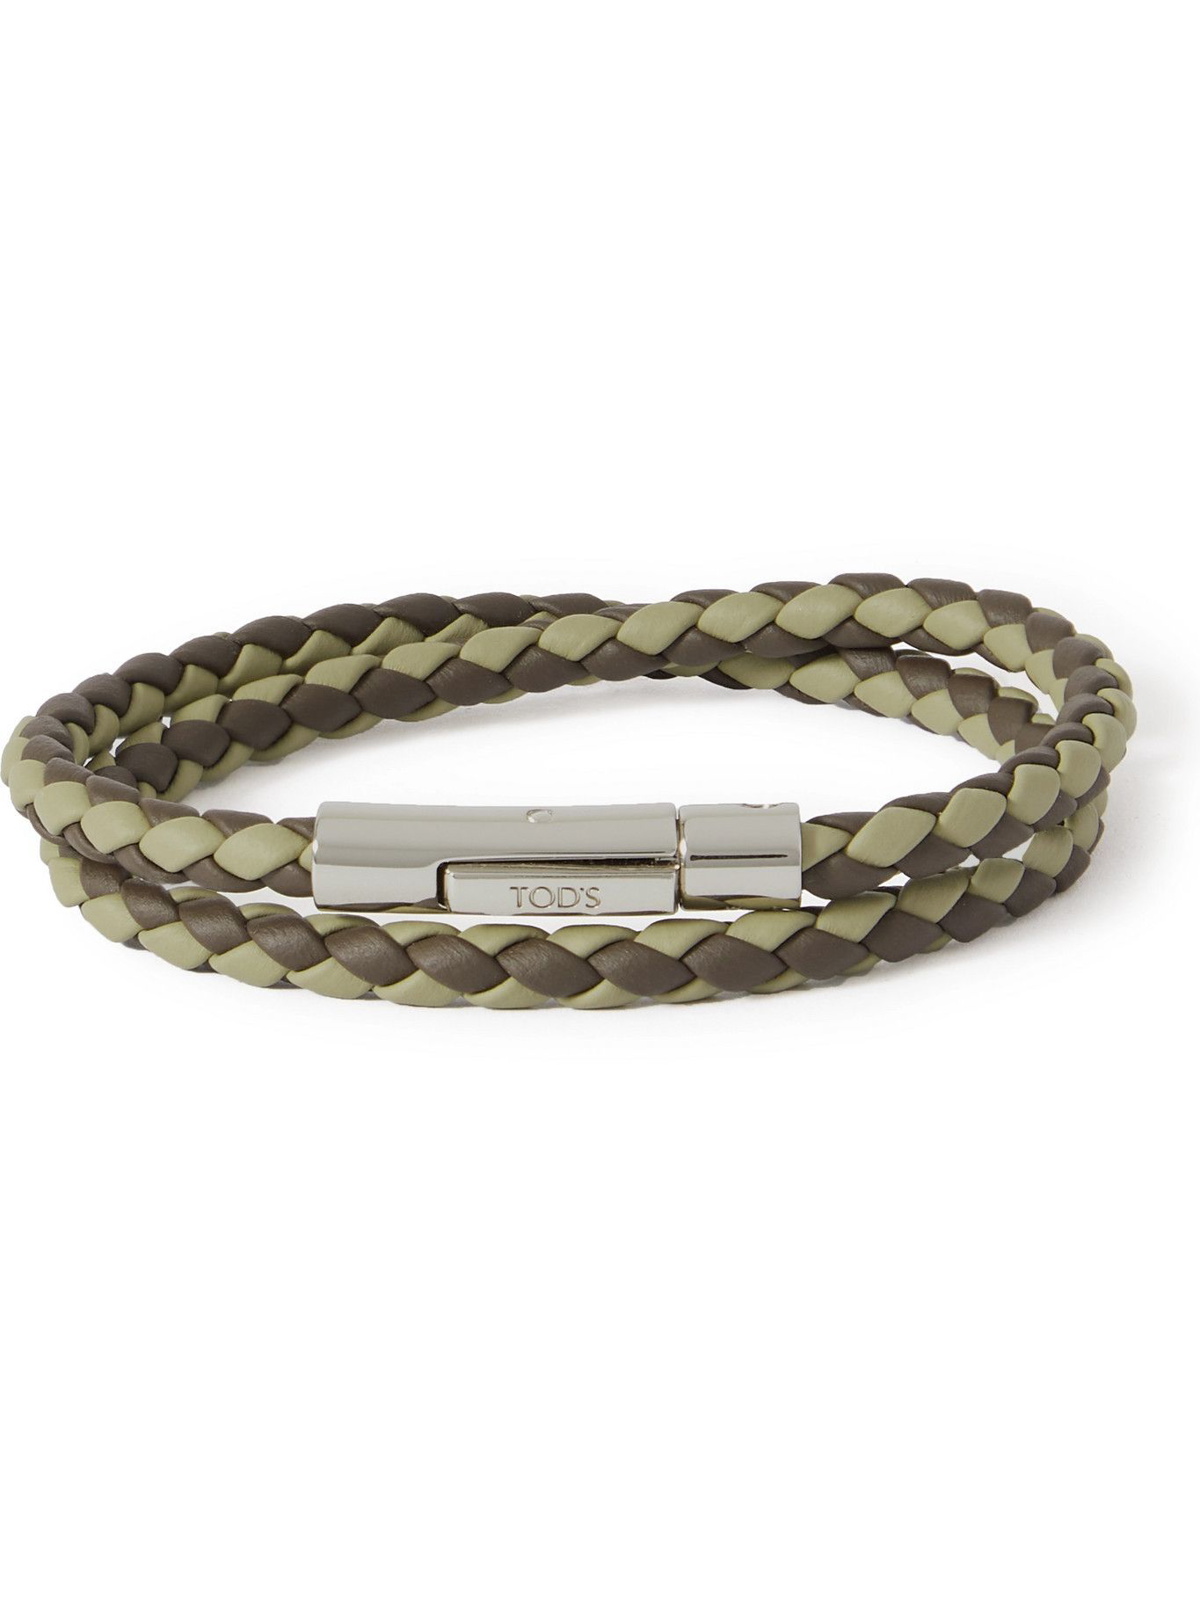 Tod's Woven Leather Bracelet - Silver-Tone Metal Wrap, Bracelets -  TOD130487